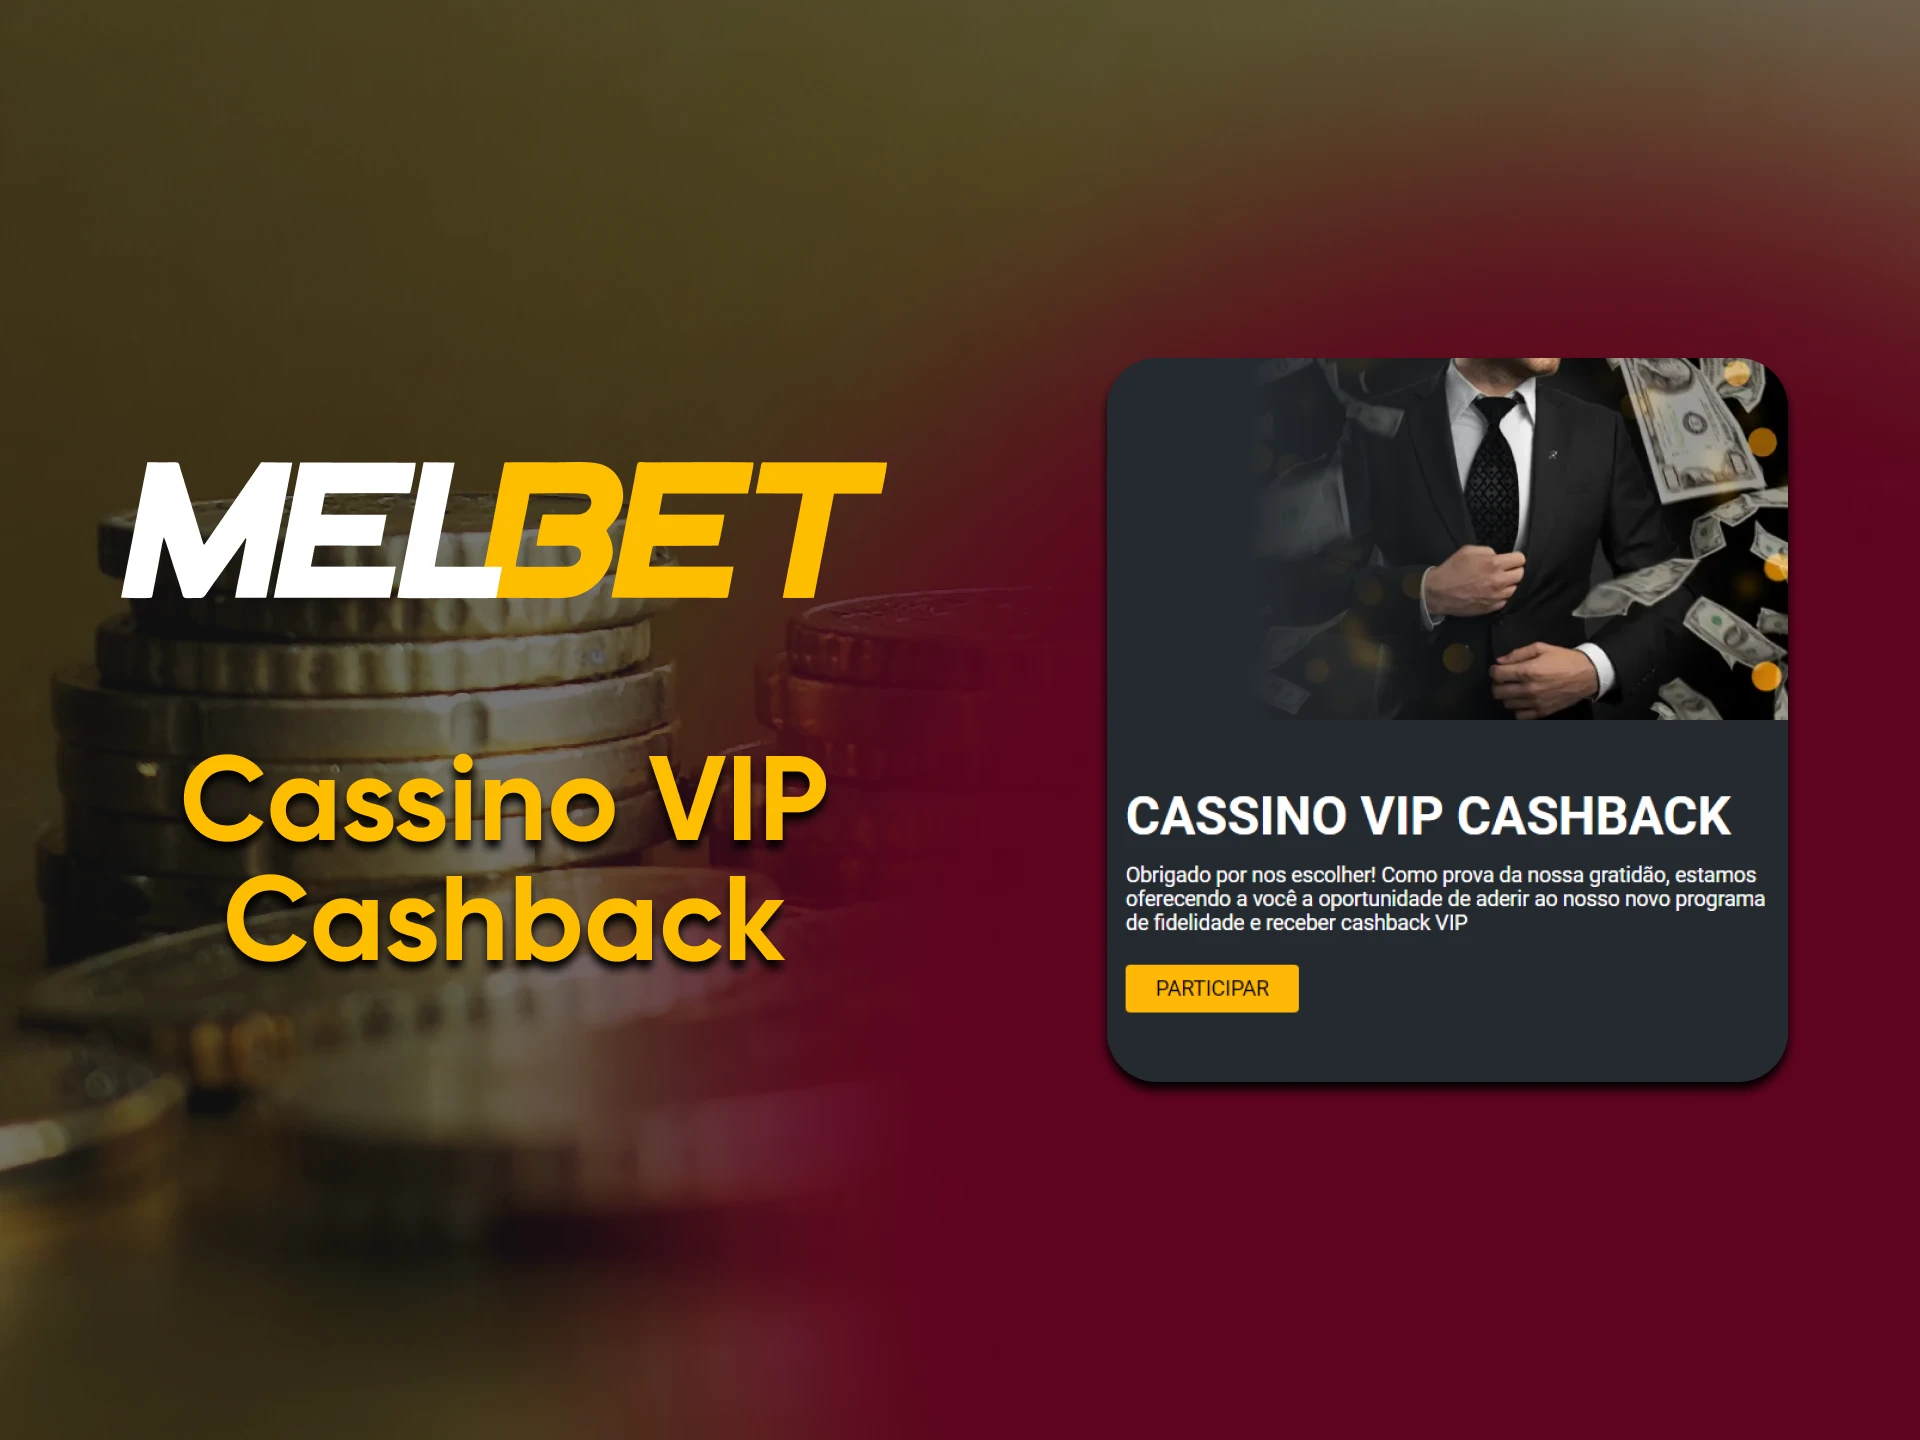 On the Melbet website, you can get cashback.